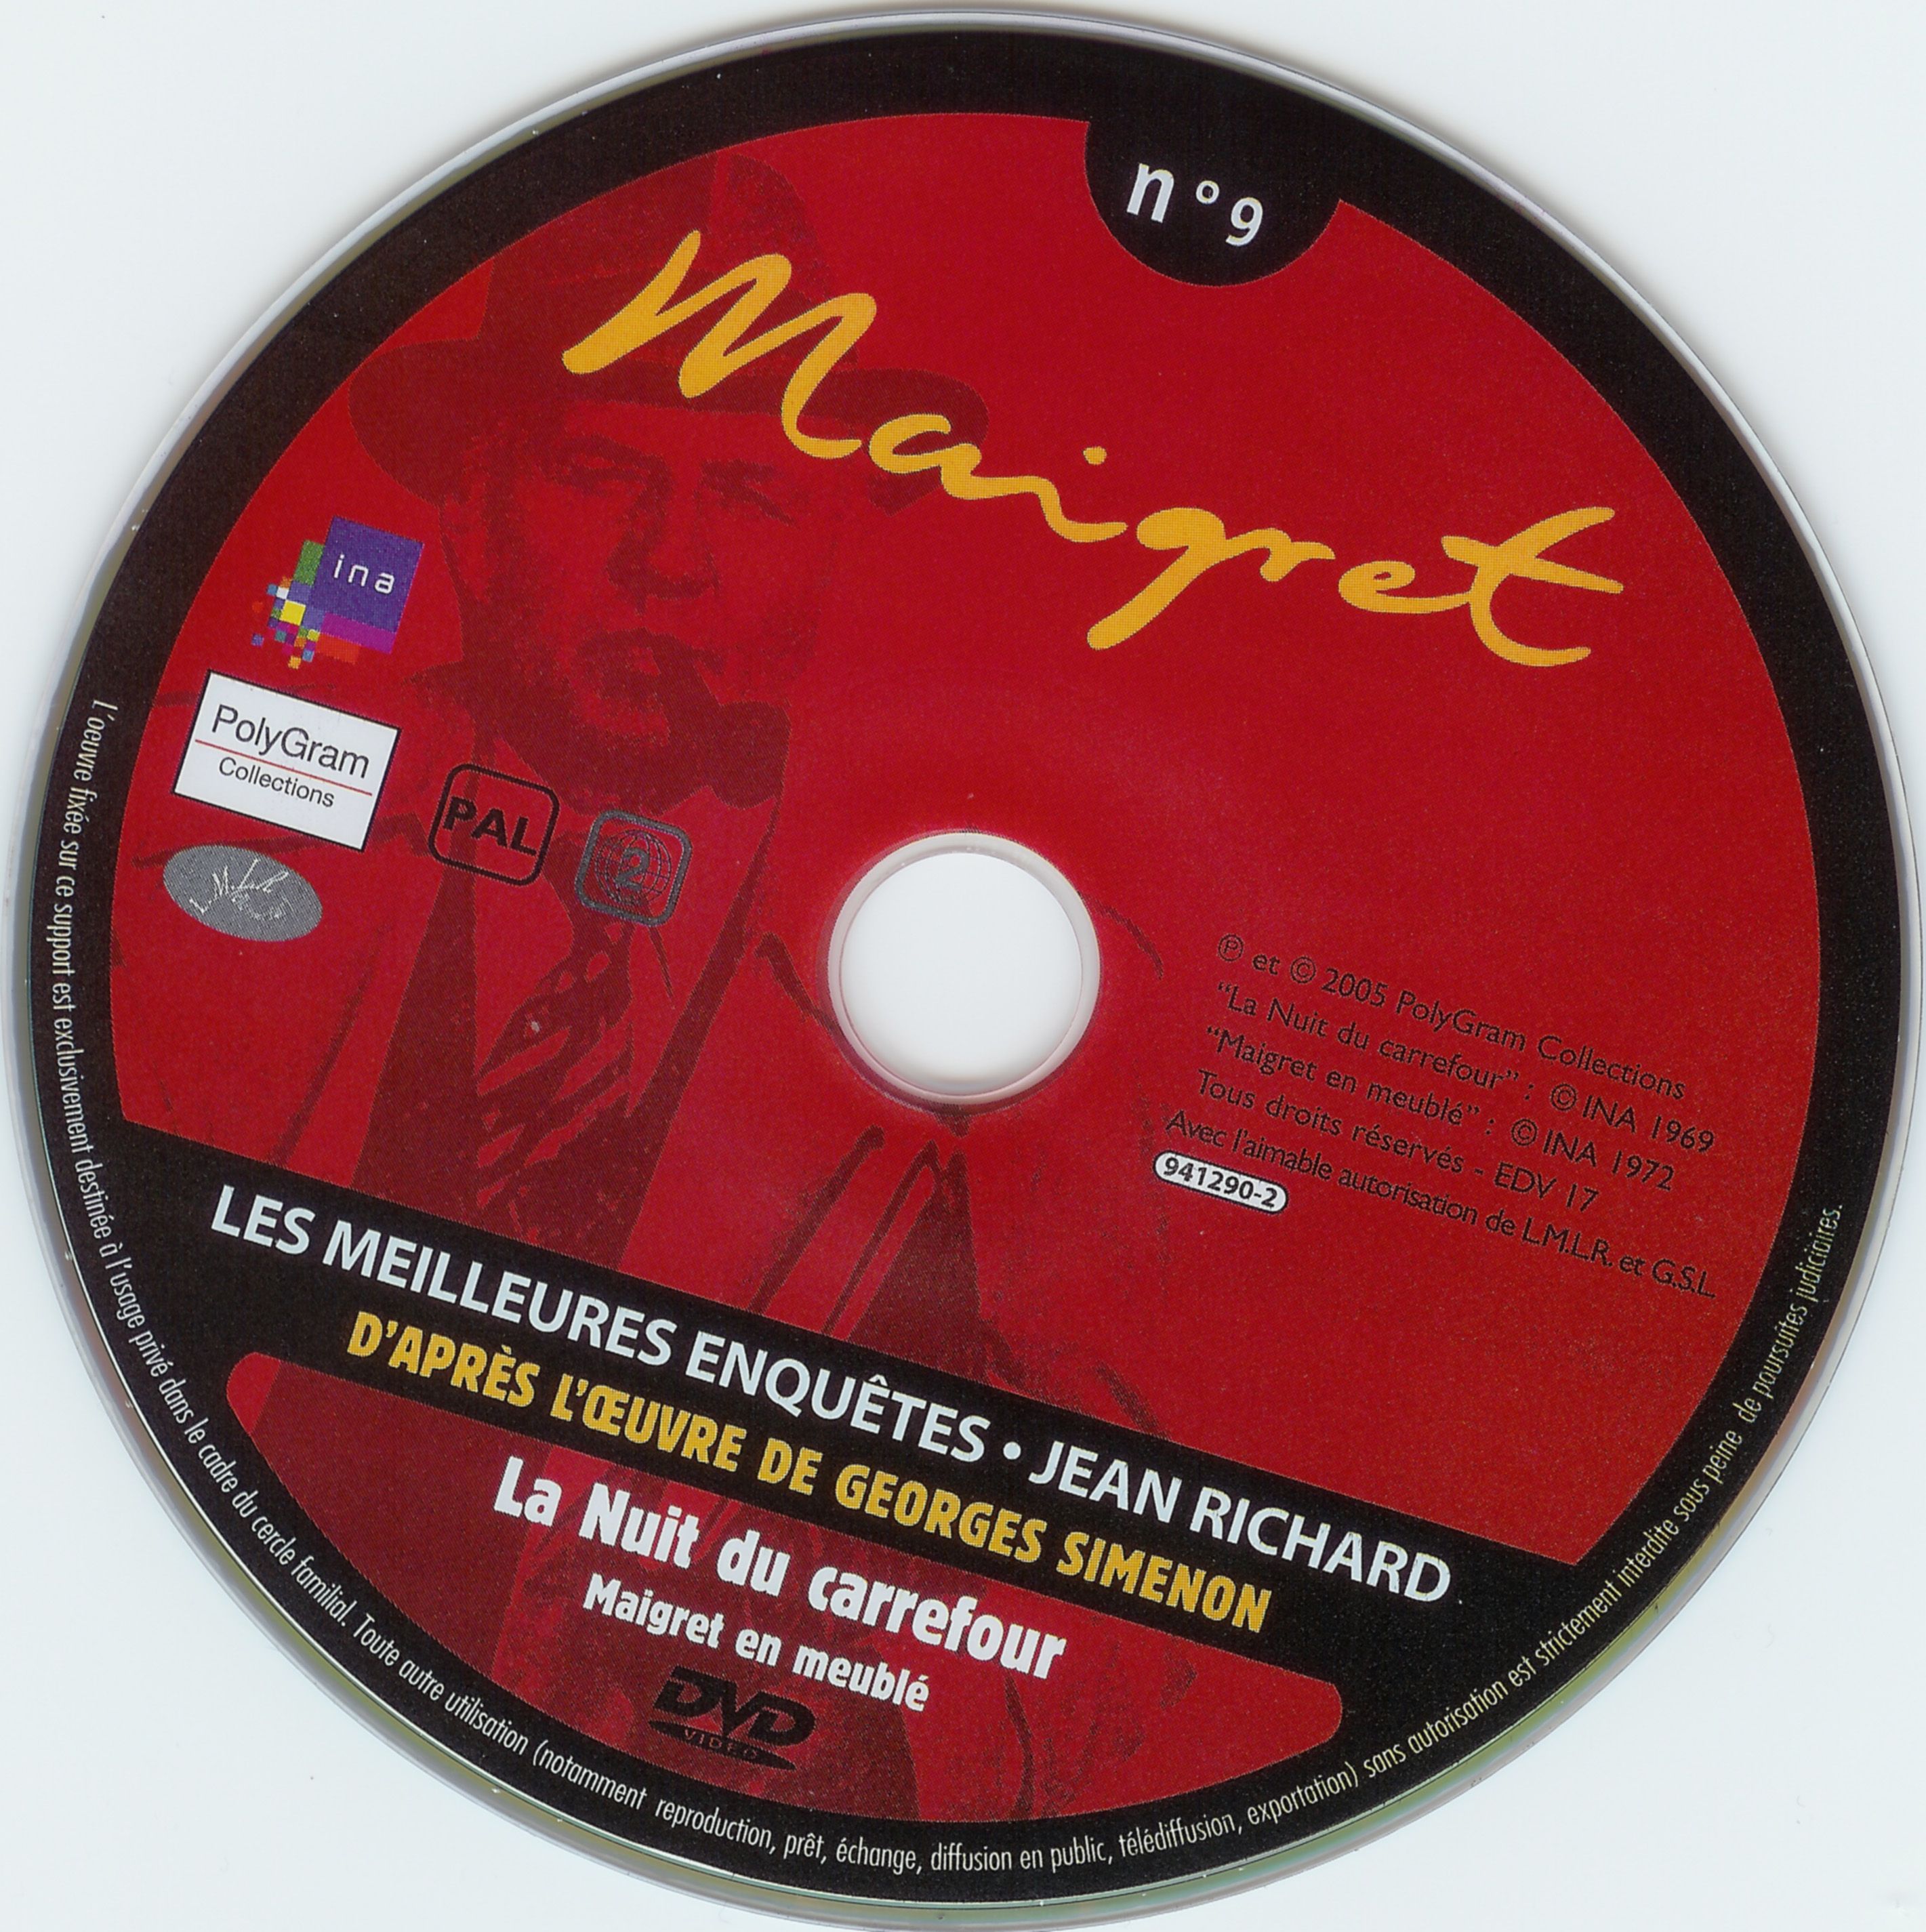 Maigret (Jean Richard) vol 09